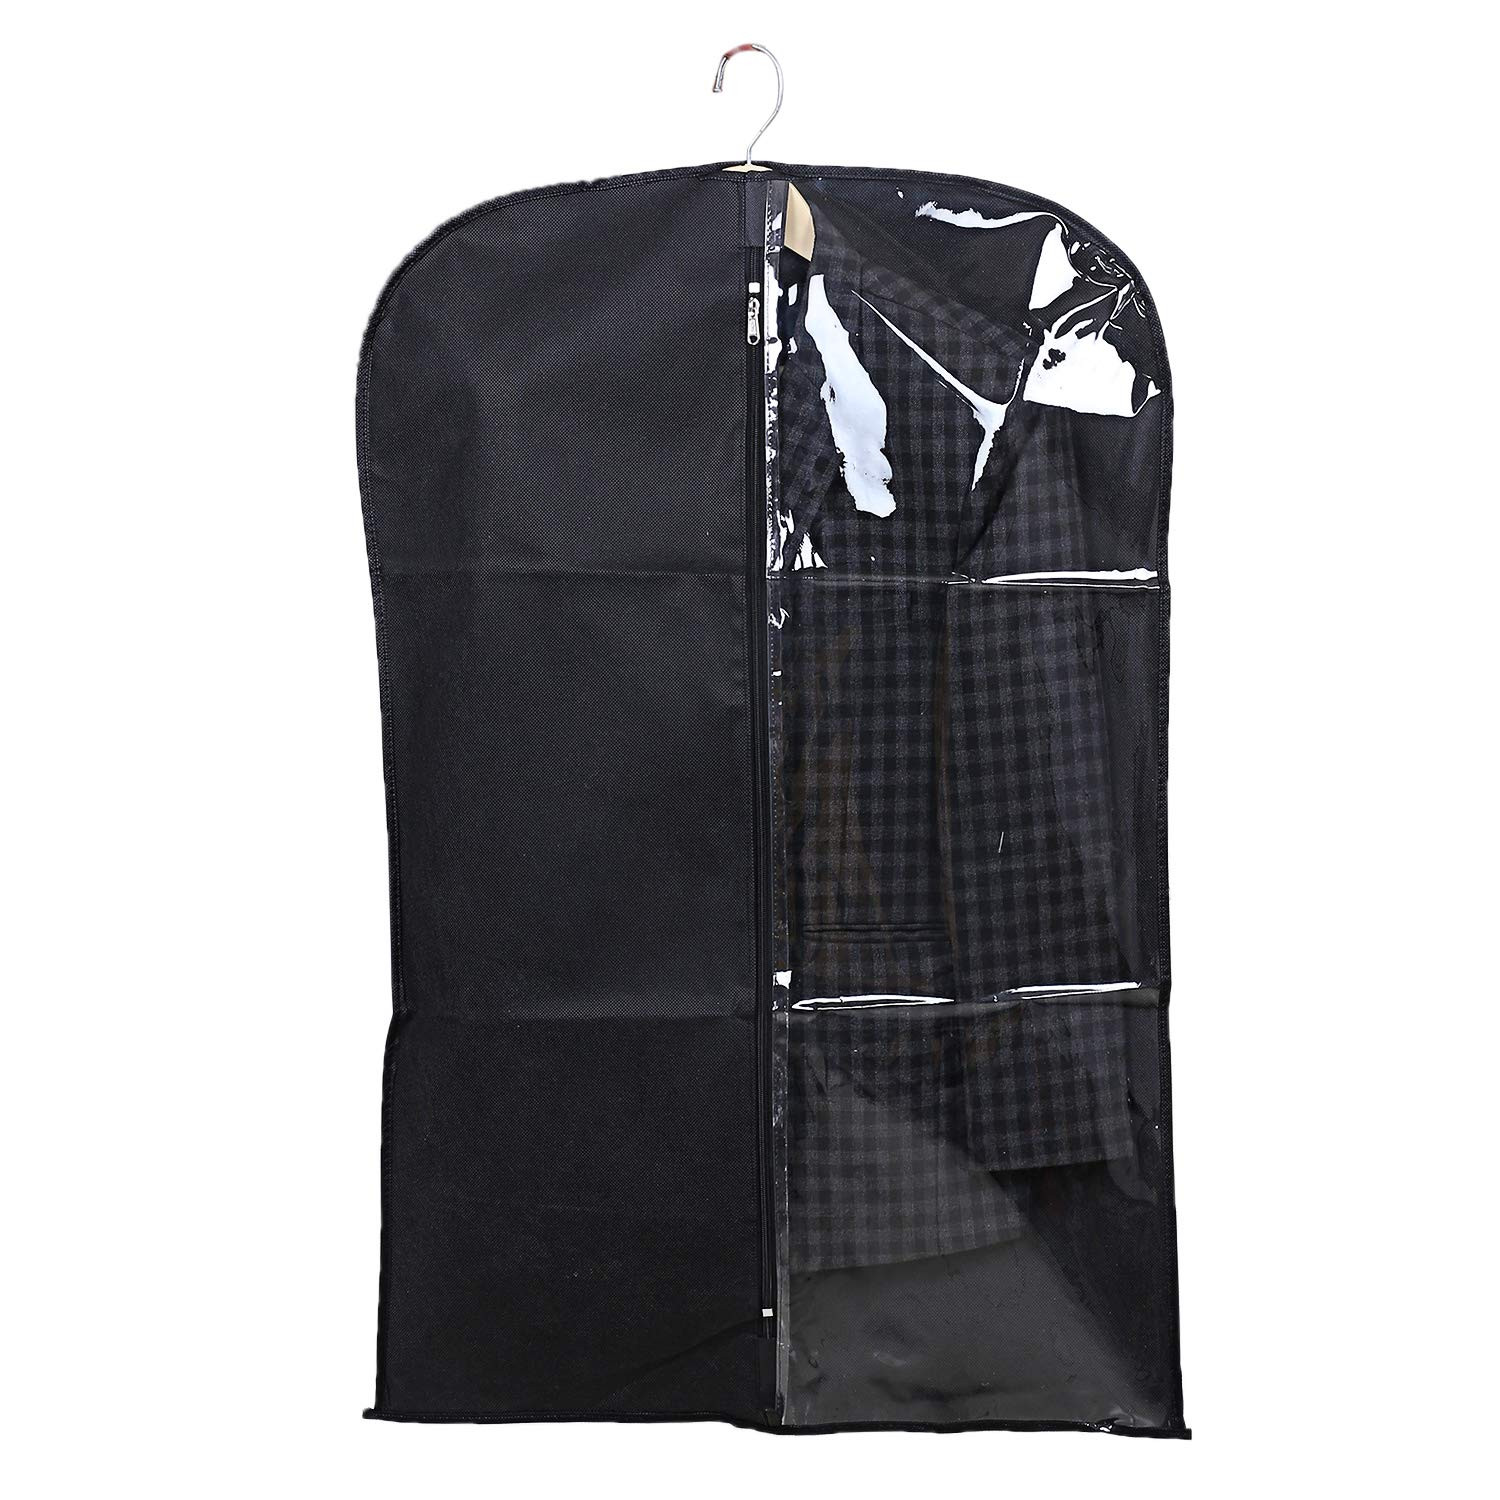 Kuber Industries Half Transparent Non Woven Men's Coat Blazer Suit Cover (Black & Maroon & Brown & Royal Blue)  -CTKTC41535